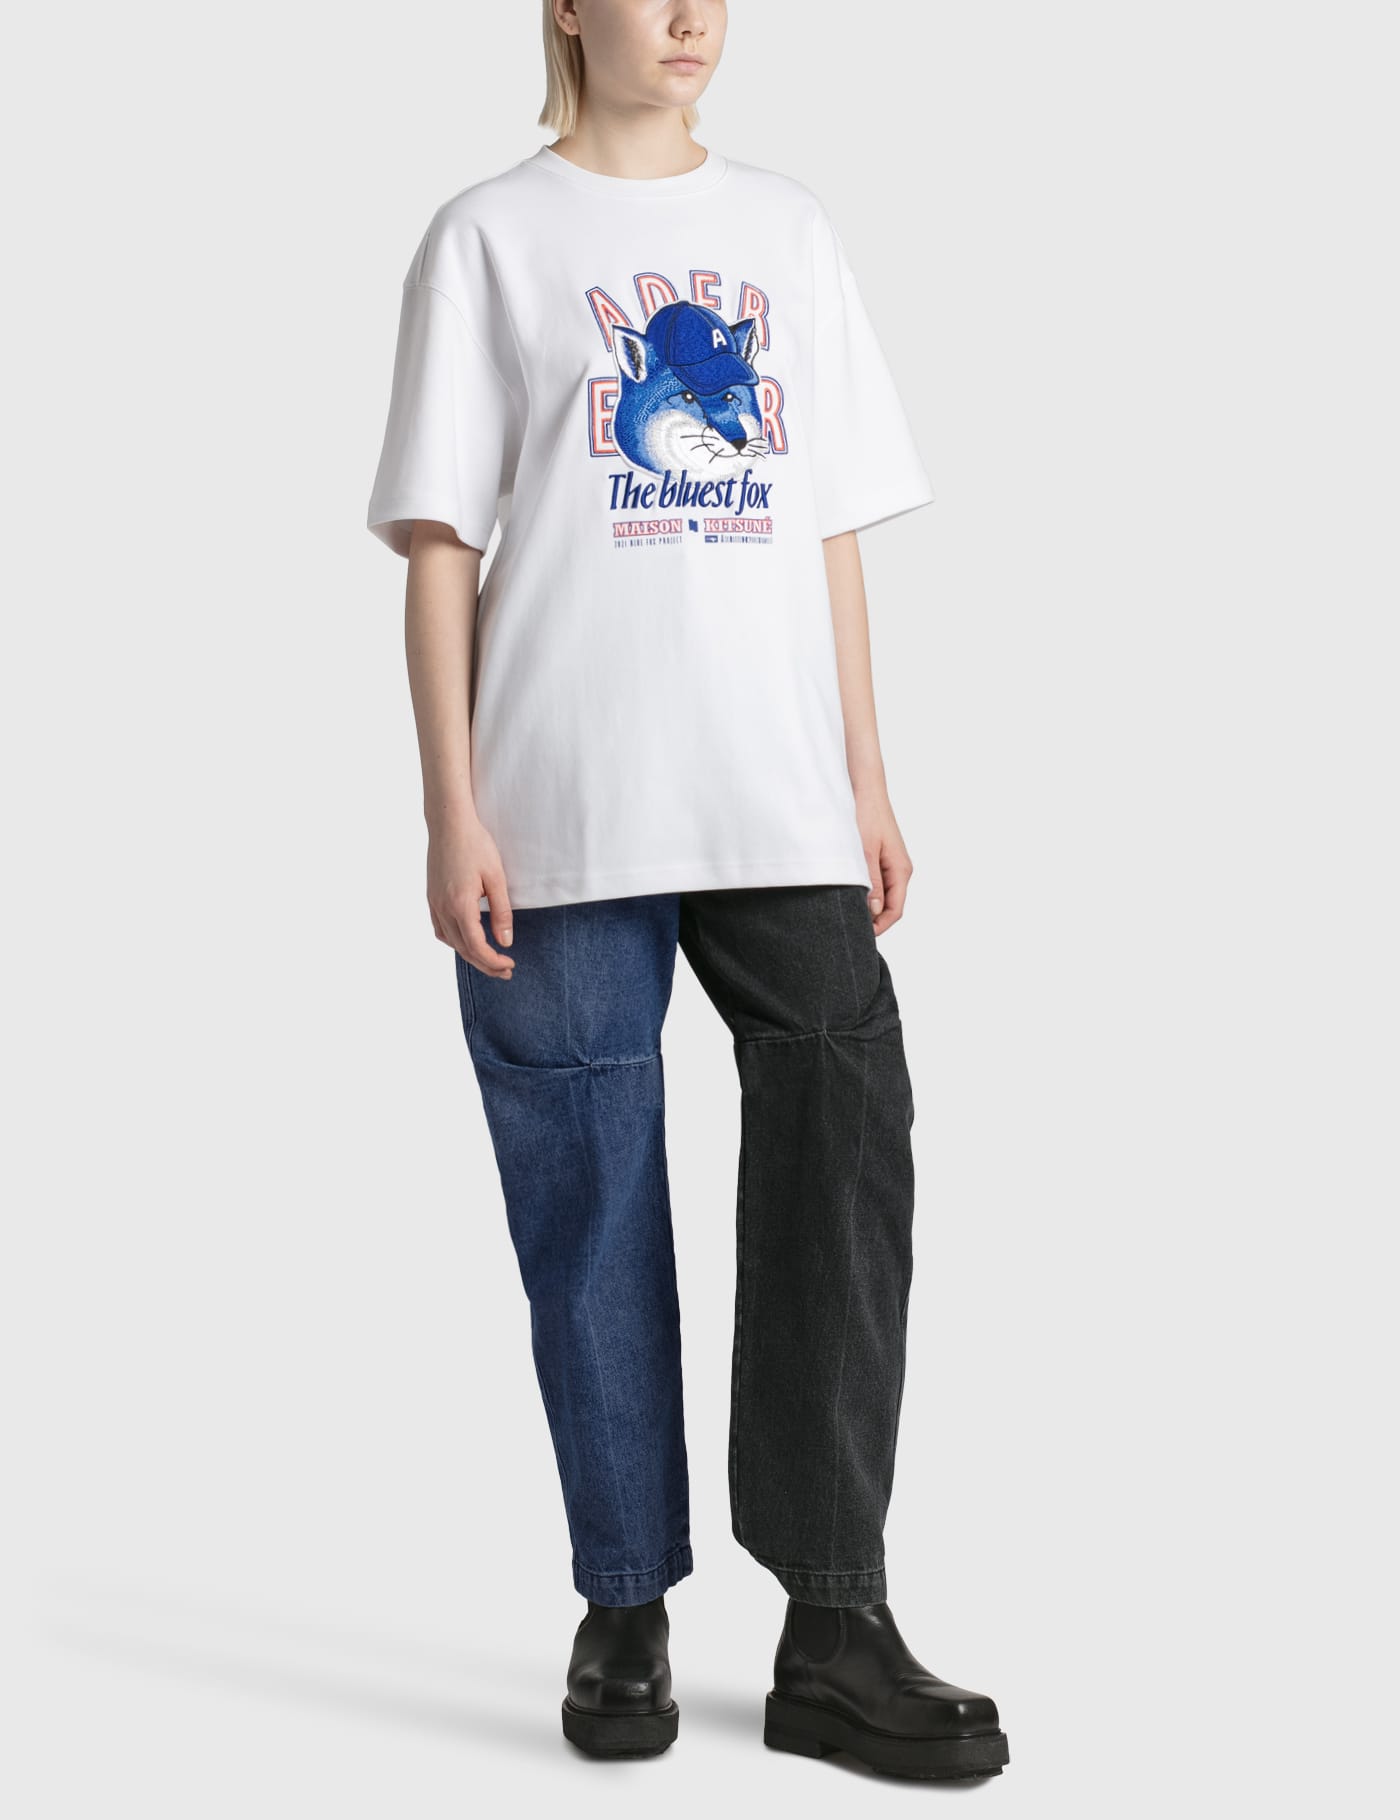 Maison Kitsune - Maison Kitsuné x Ader Error The Bluest Fox T-shirt | HBX -  Globally Curated Fashion and Lifestyle by Hypebeast